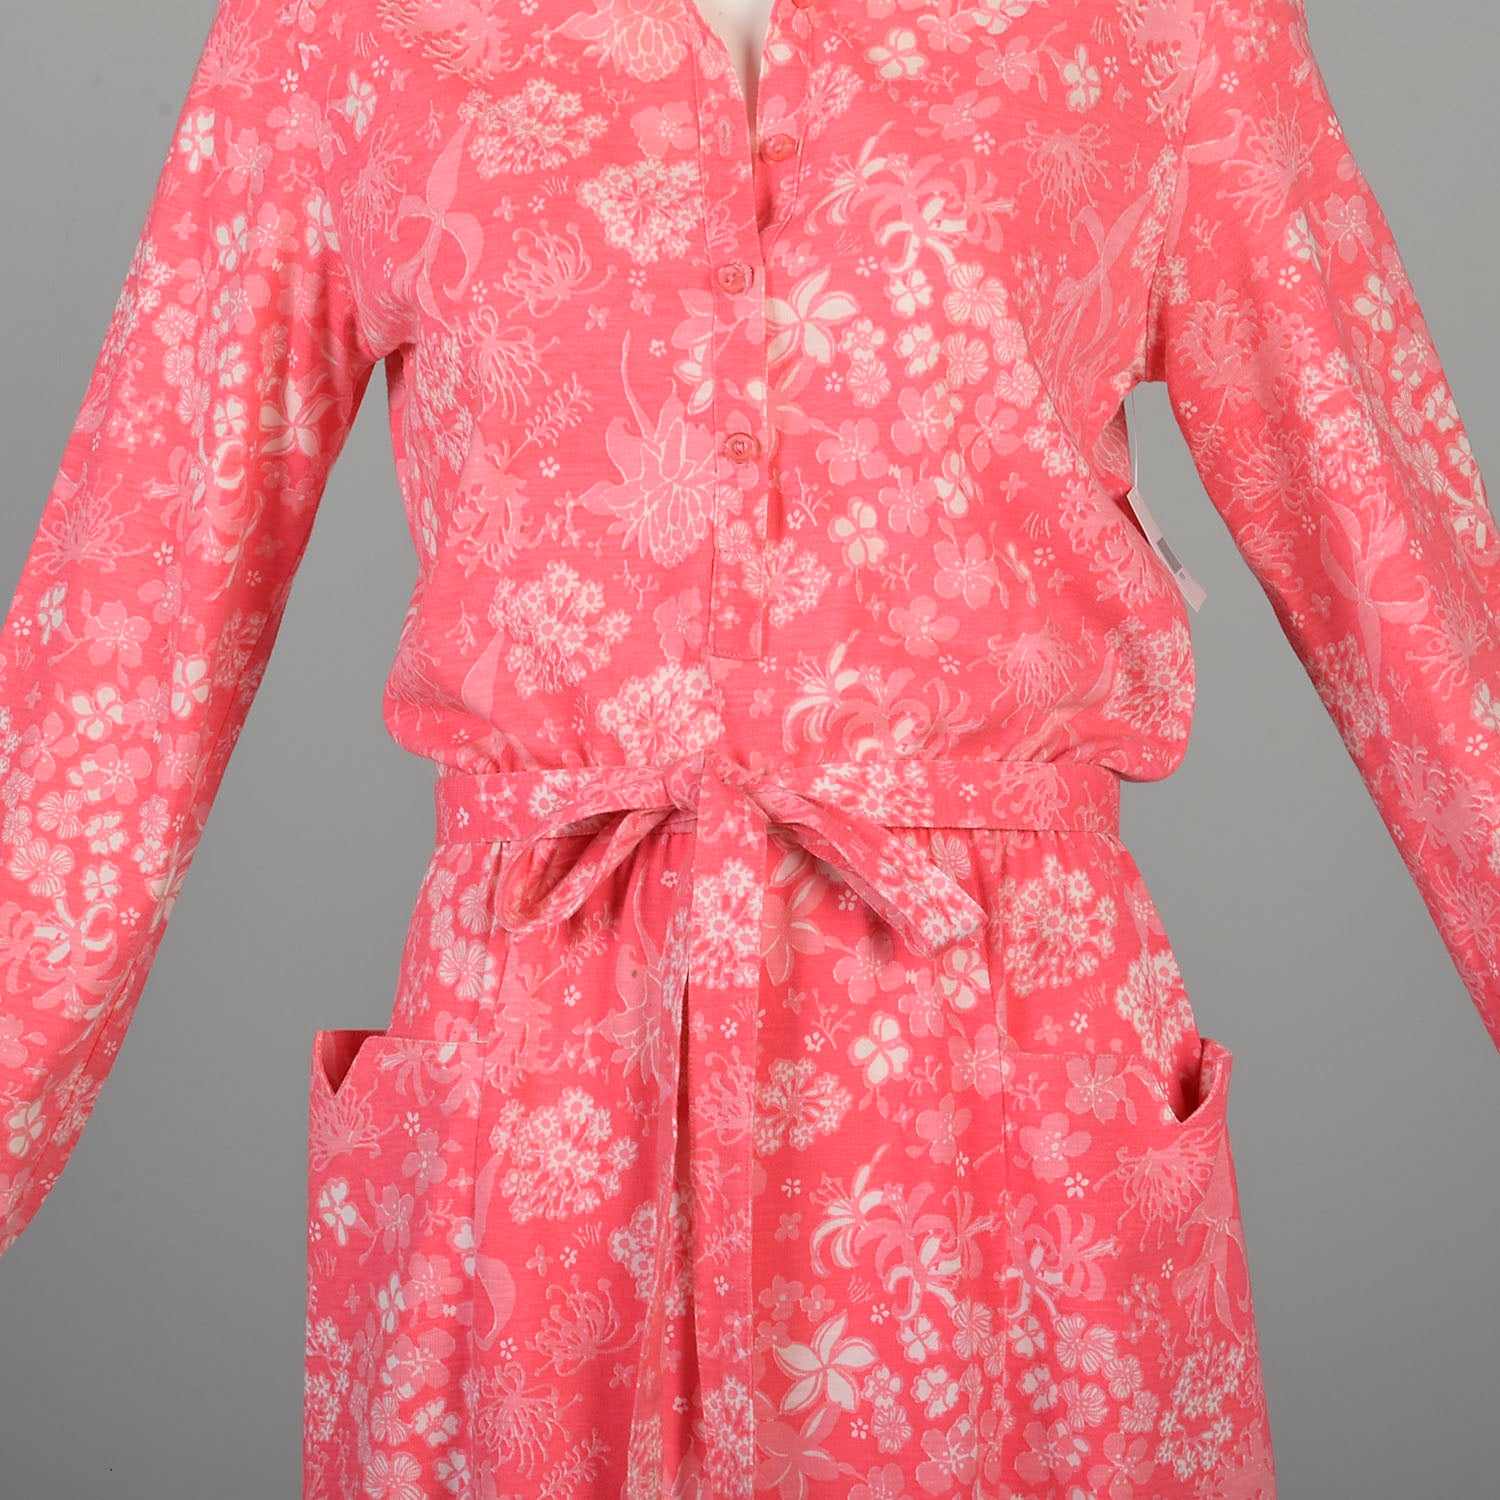 Small 1970s Liza by Lilly Pulitzer Dress Hot Pink Print Barbie Shirtwaist Dress